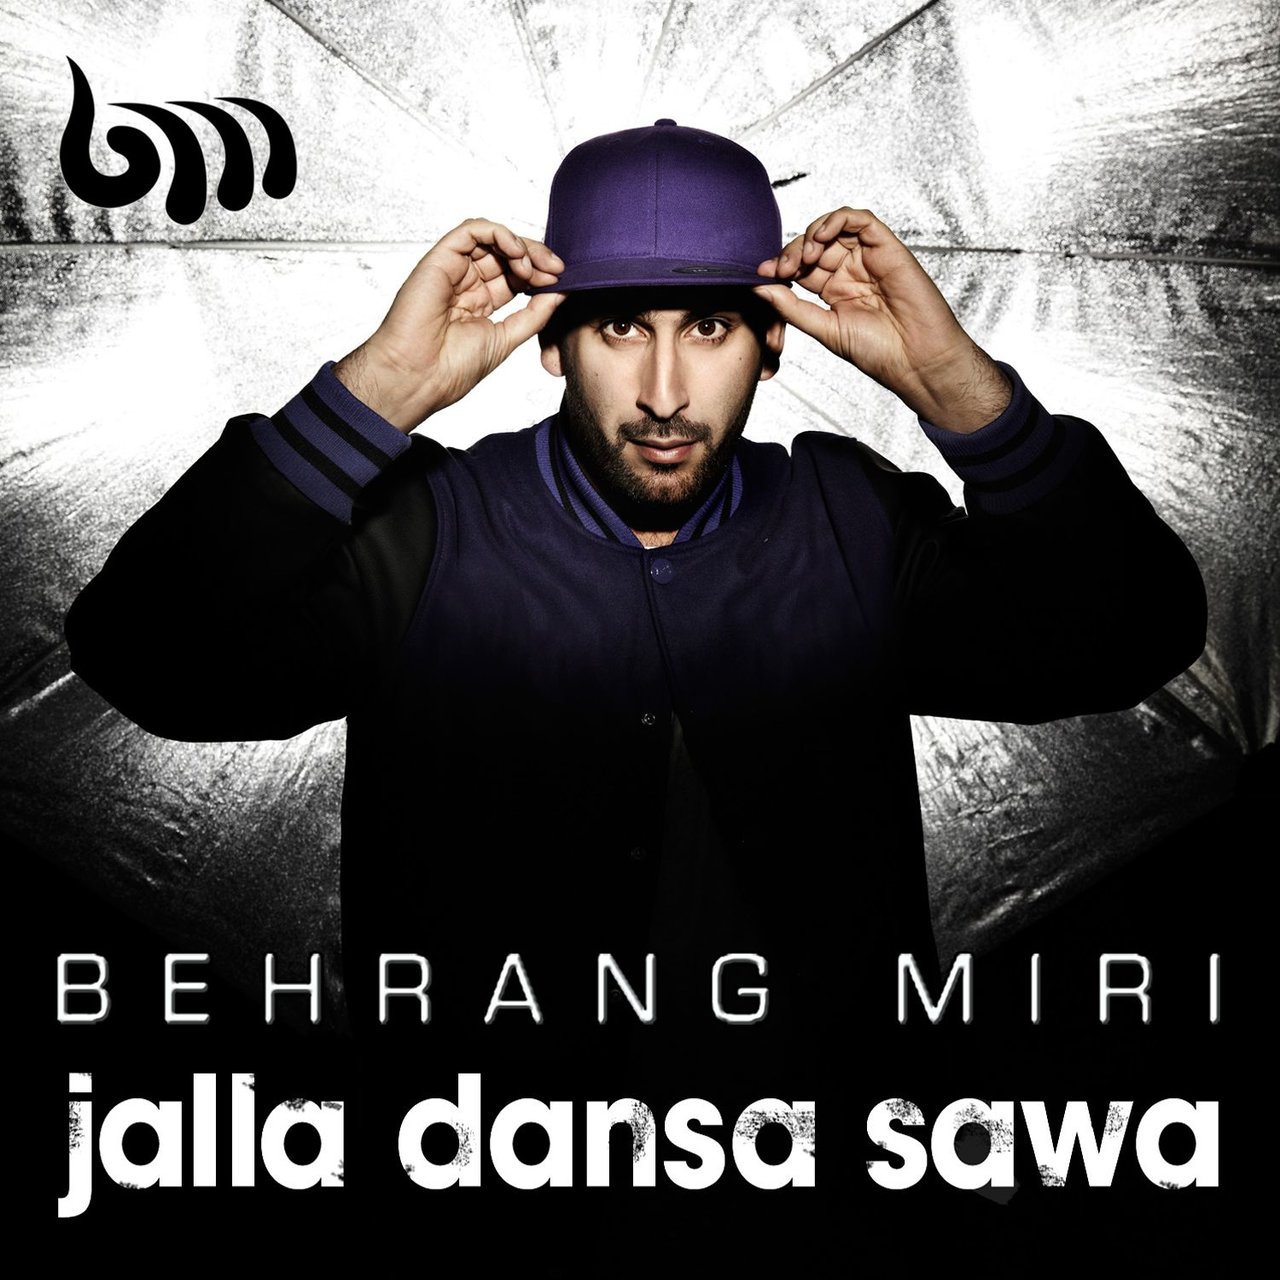 Behrang Miri — Jalla dansa sawa cover artwork